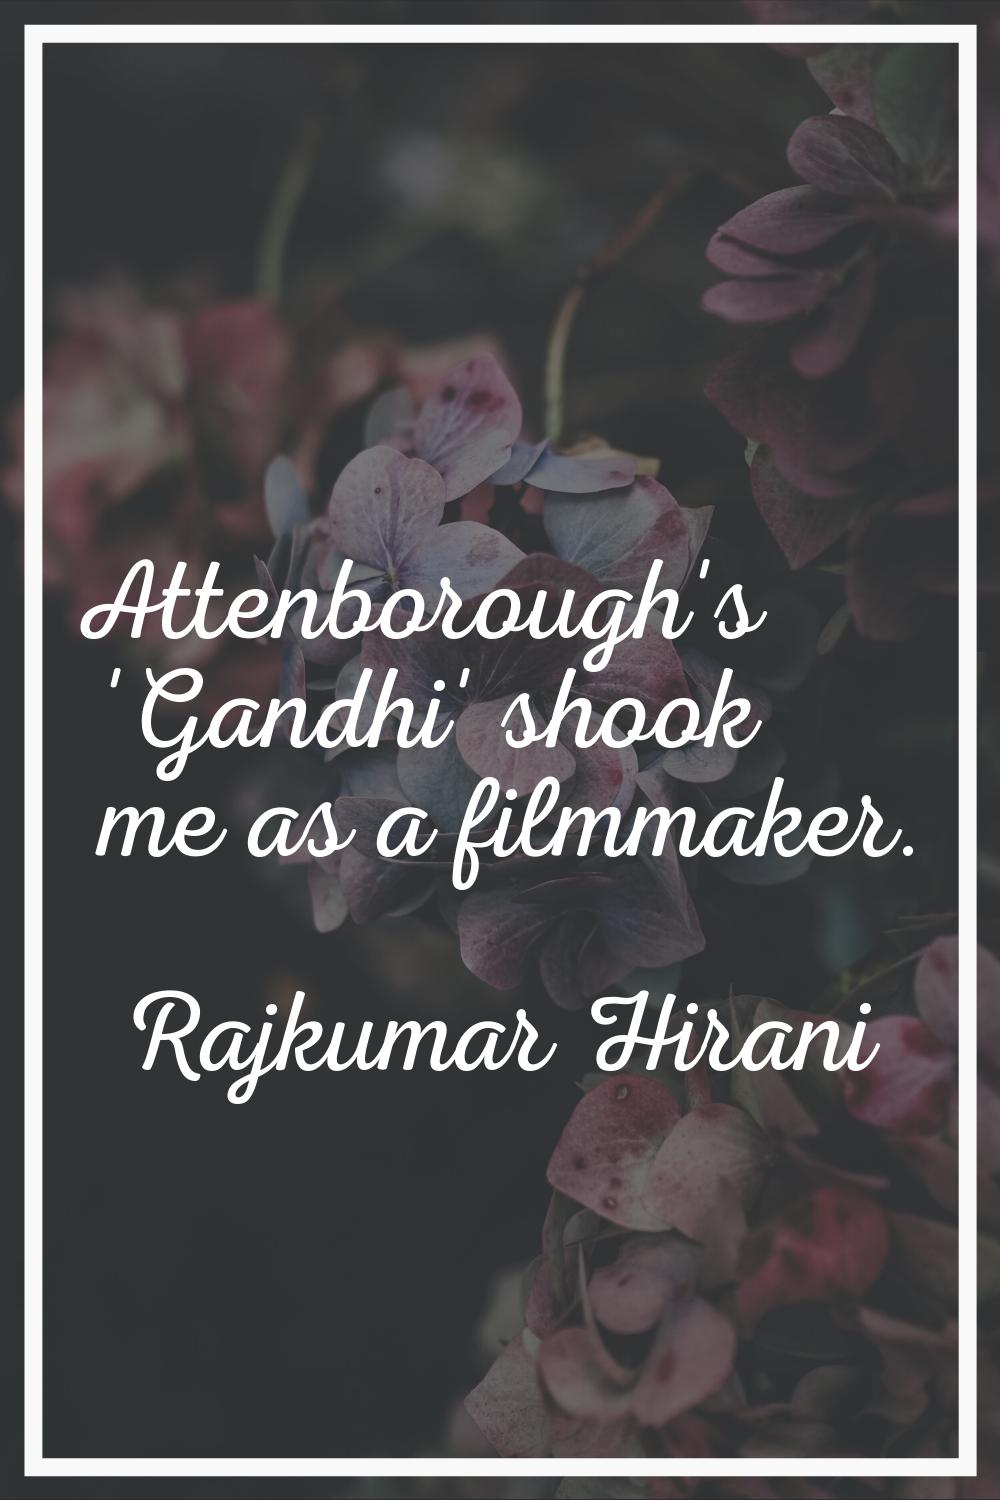 Attenborough's 'Gandhi' shook me as a filmmaker.